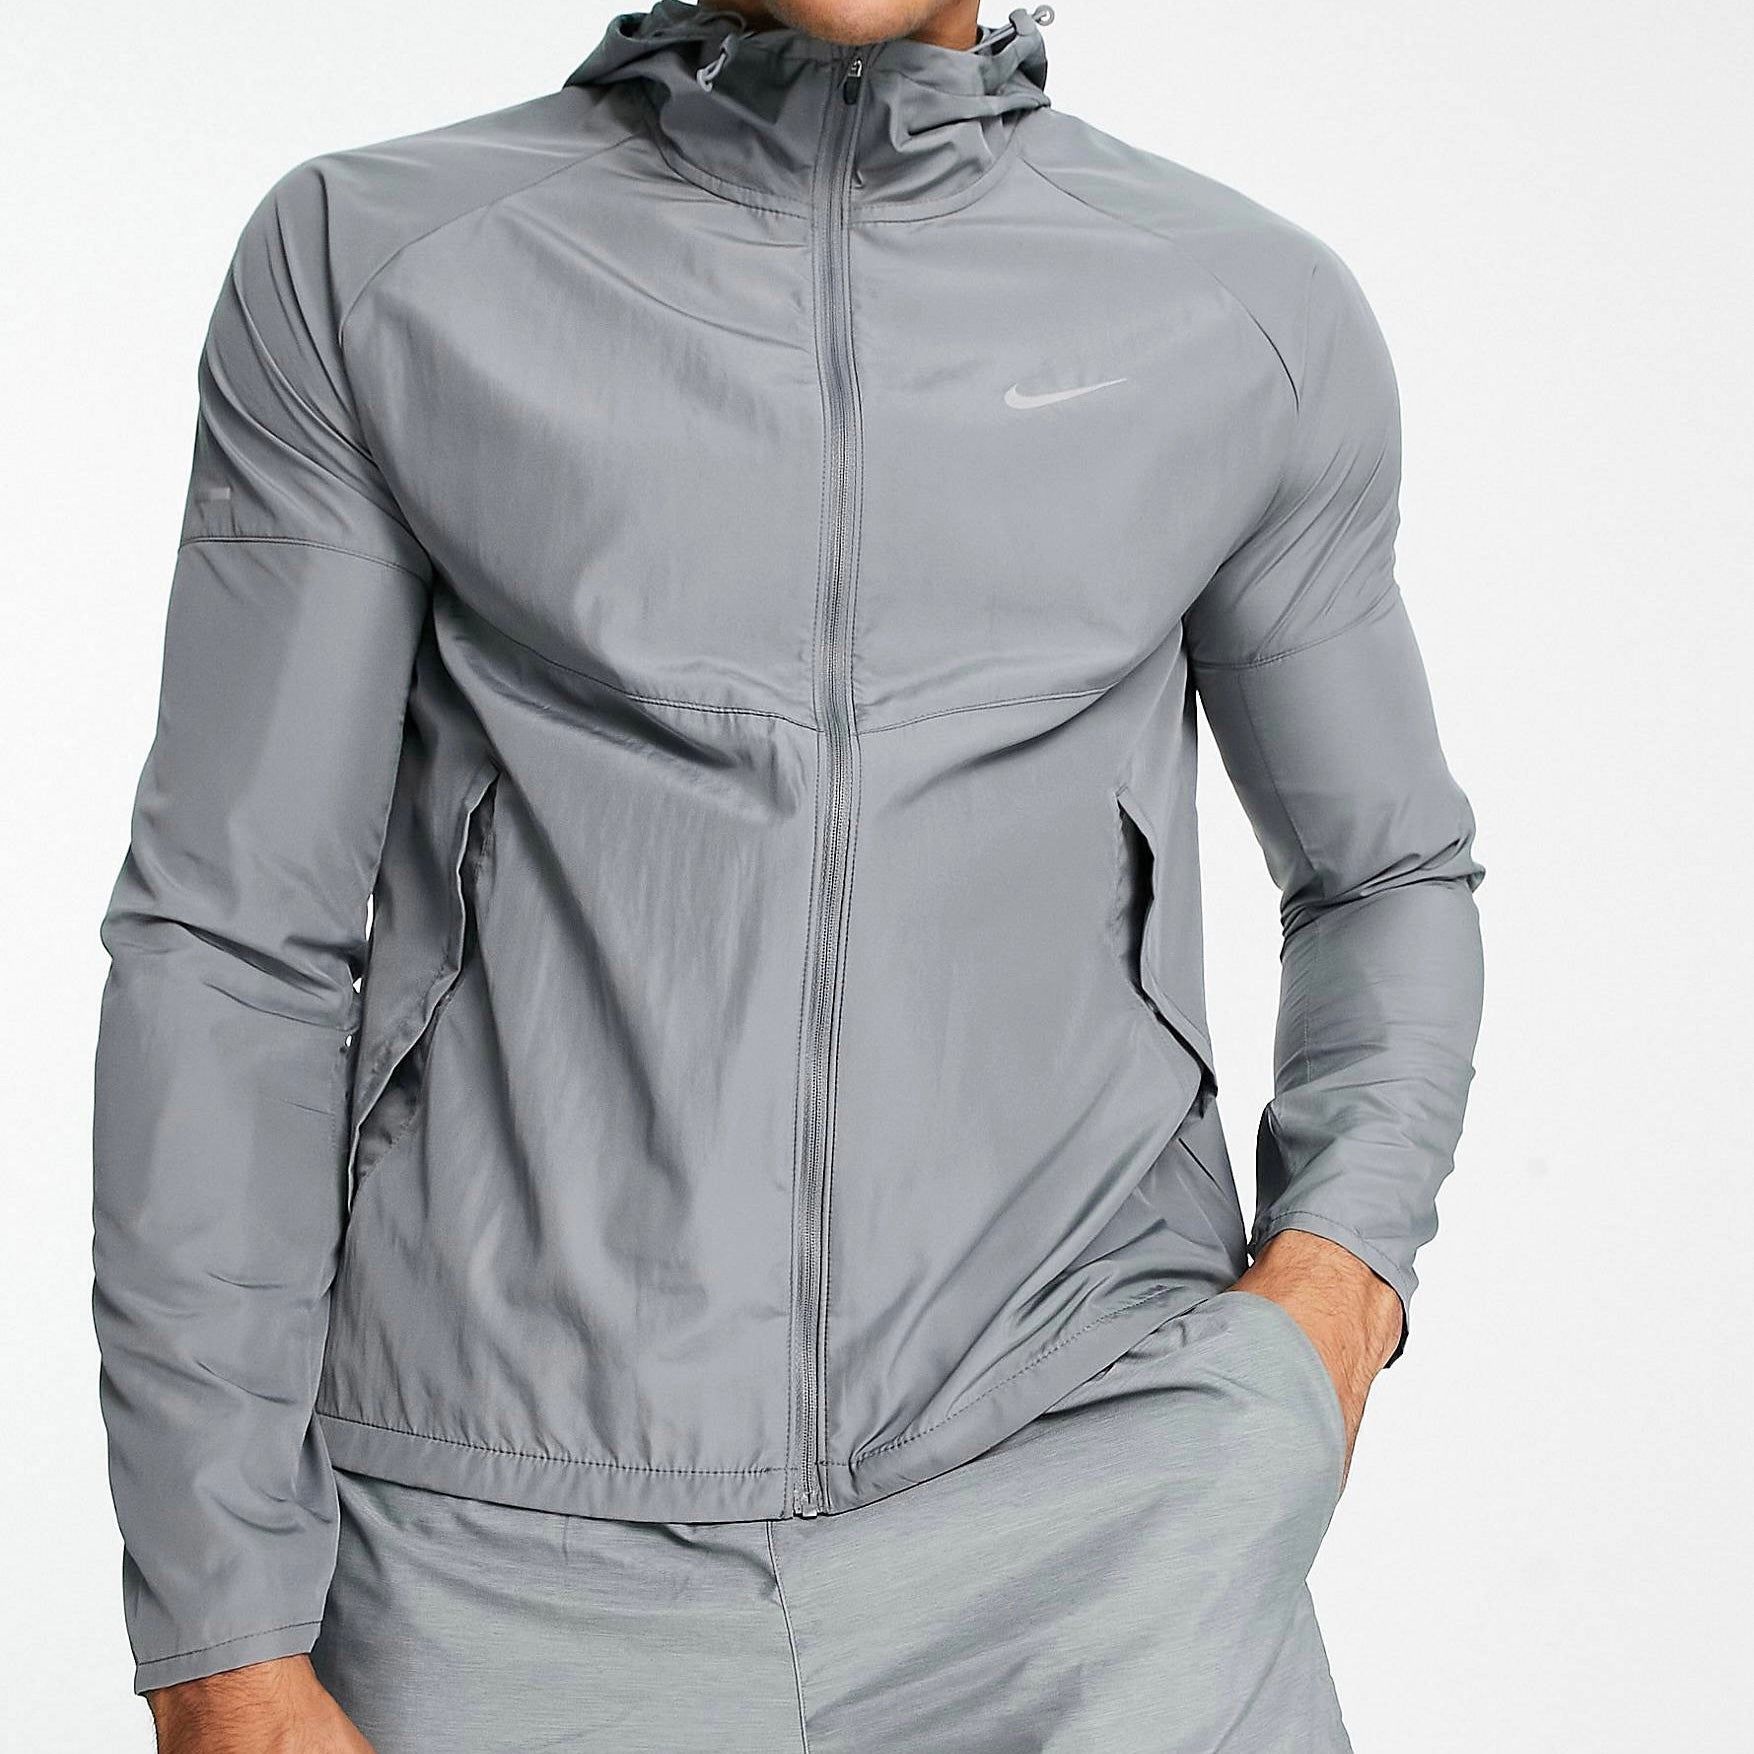 Nike Windrunner Jacket - Grey